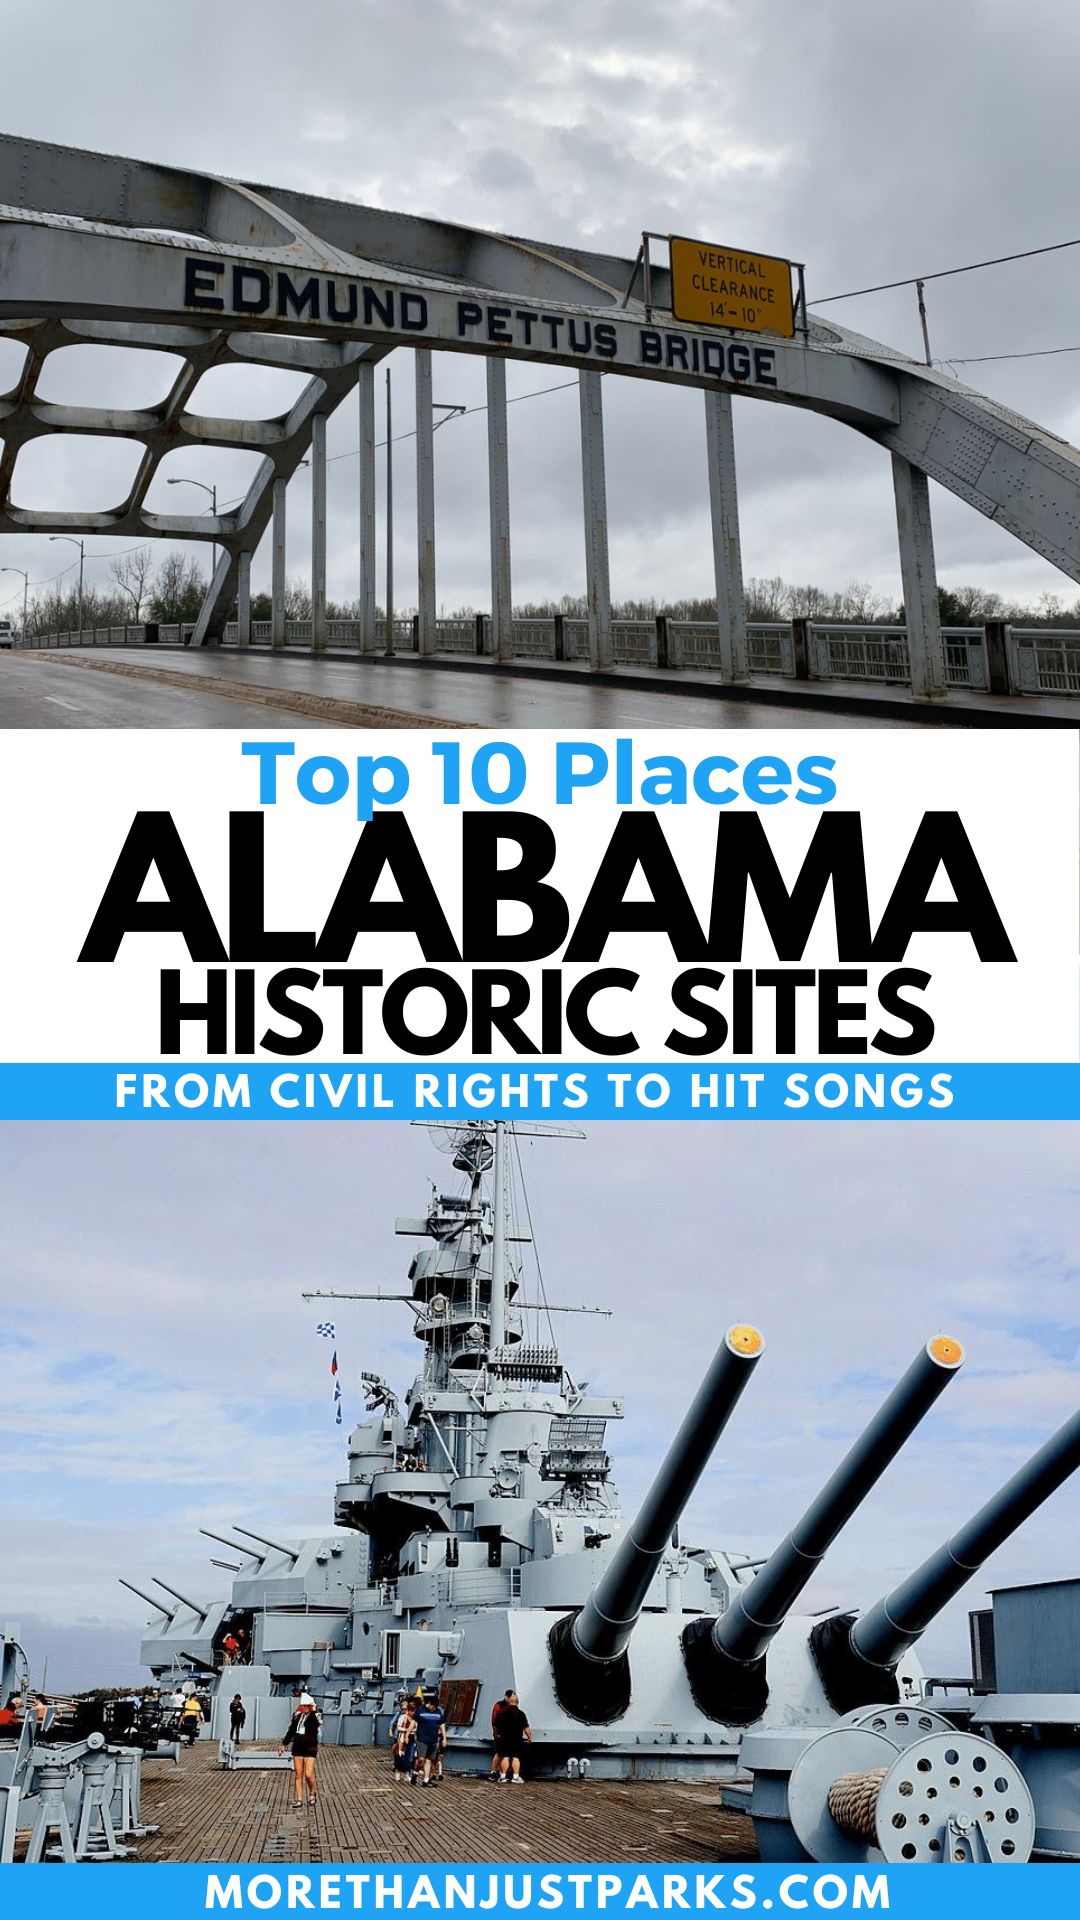 Alabama Historic Sites